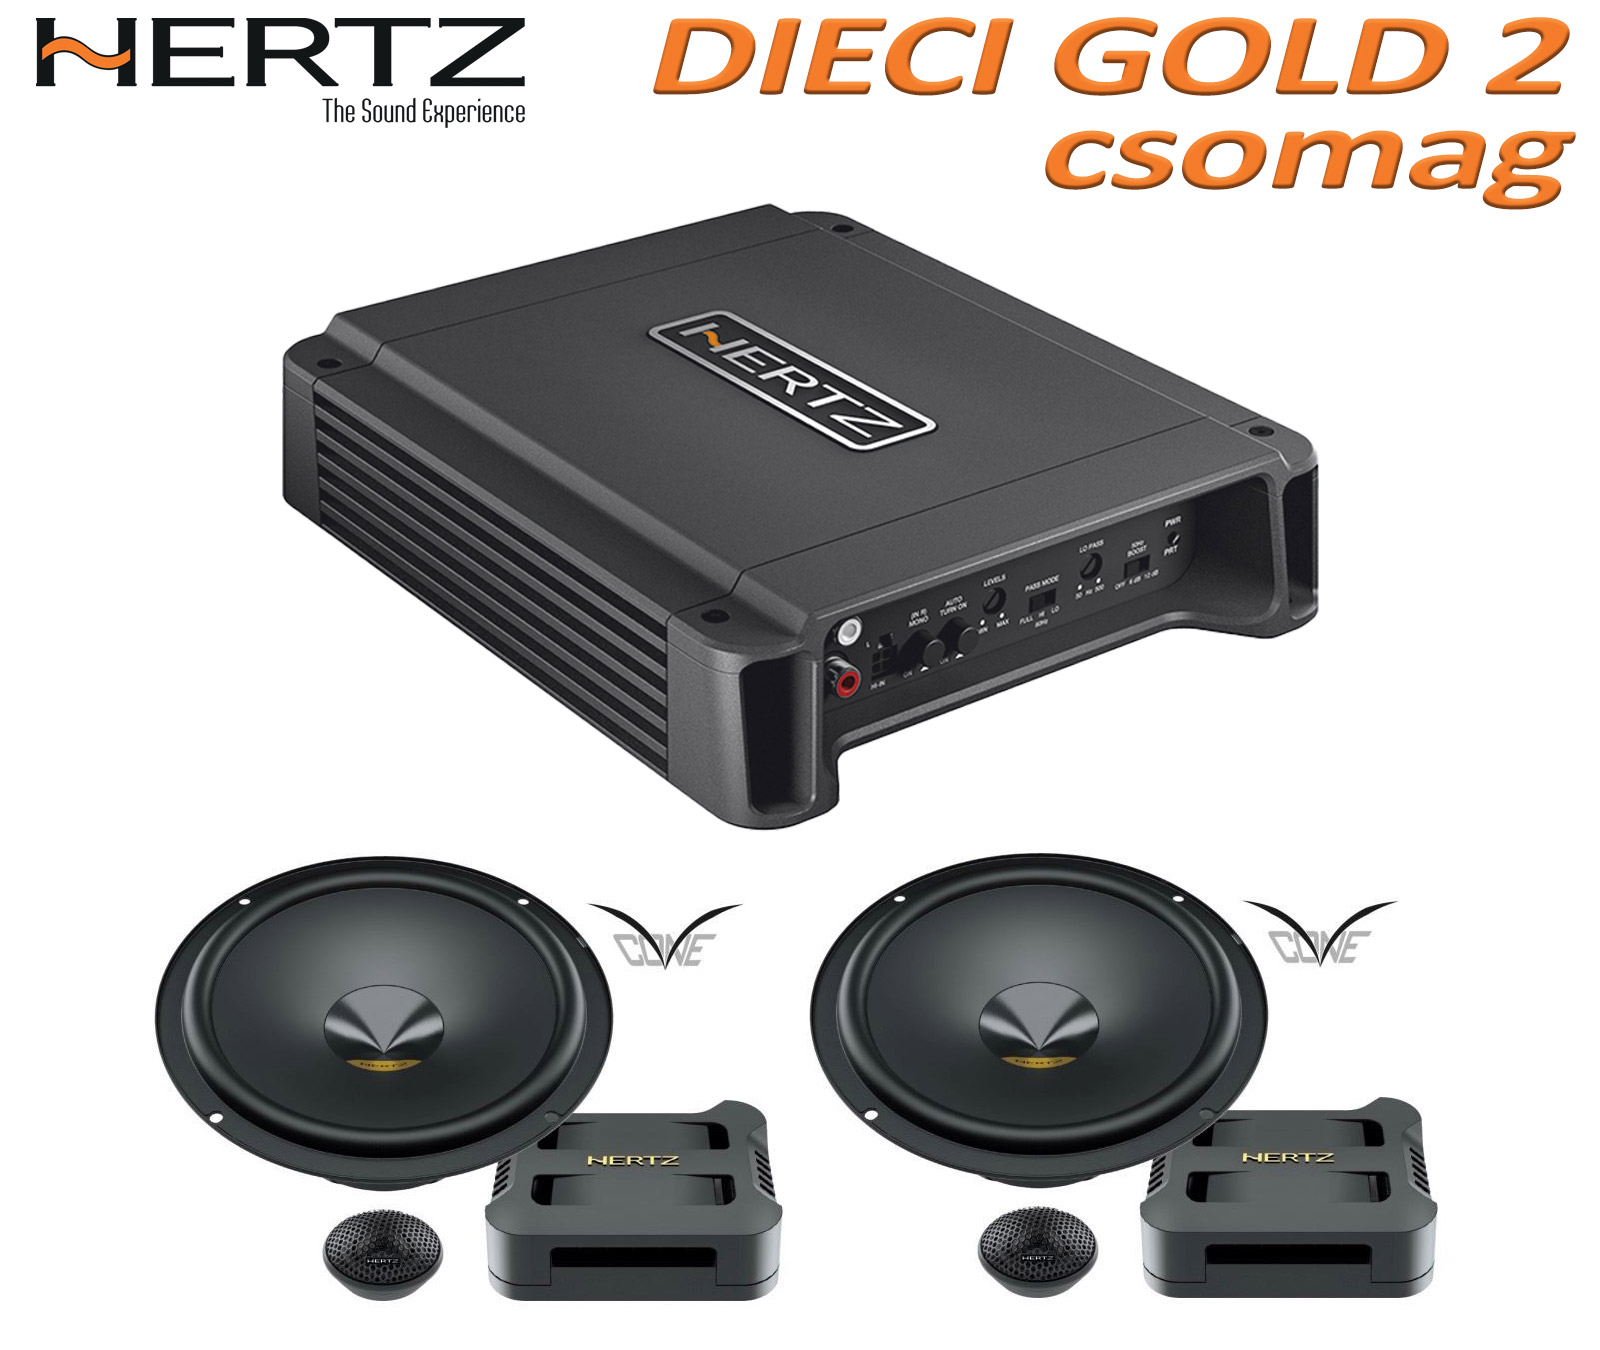 Hertz - Dieci Gold 2 csomag - HCP 2 erősítő + DPK 165.3 special Gold edition 